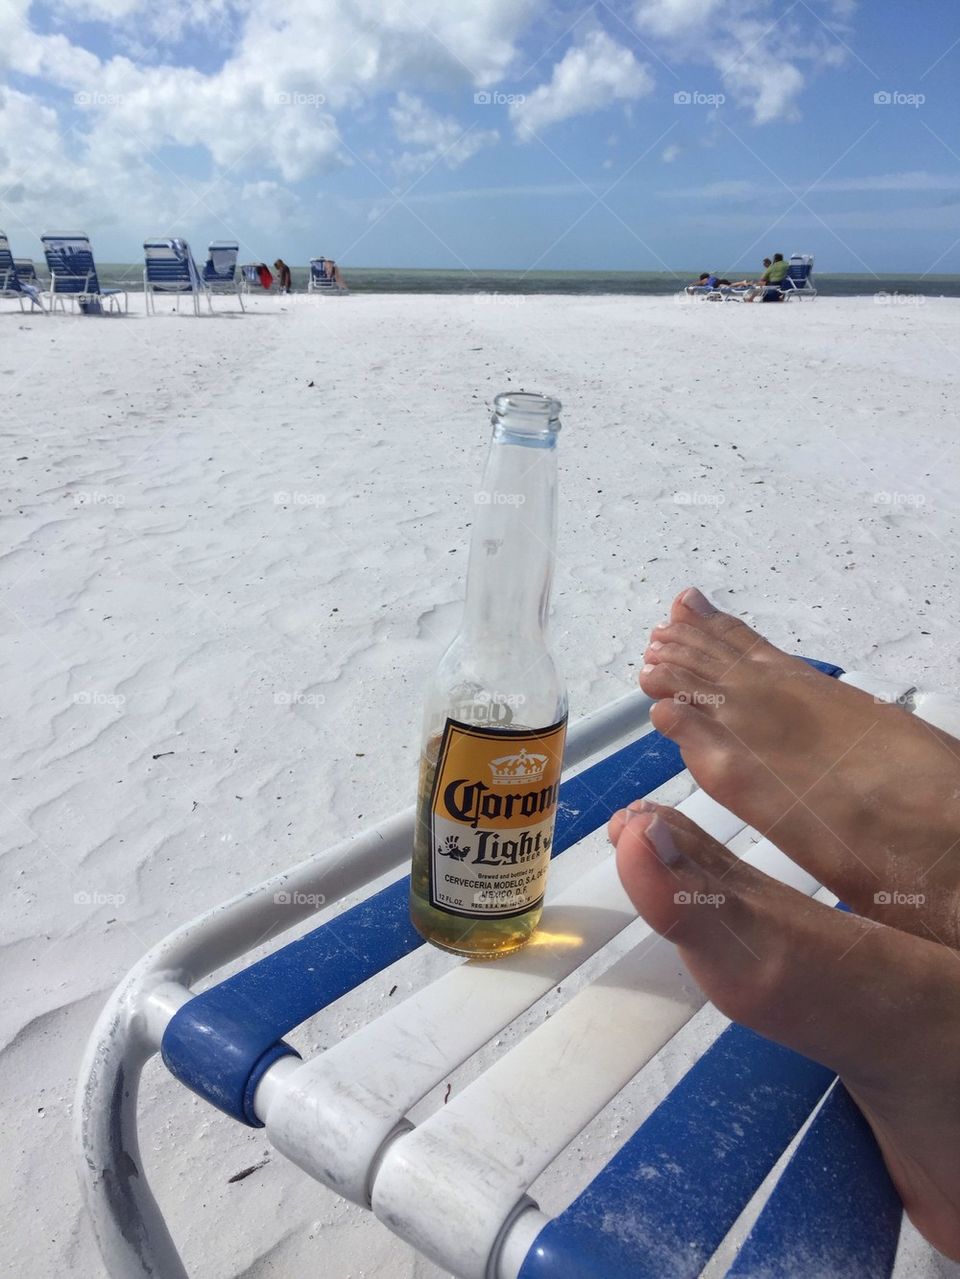 Corona on the Beach